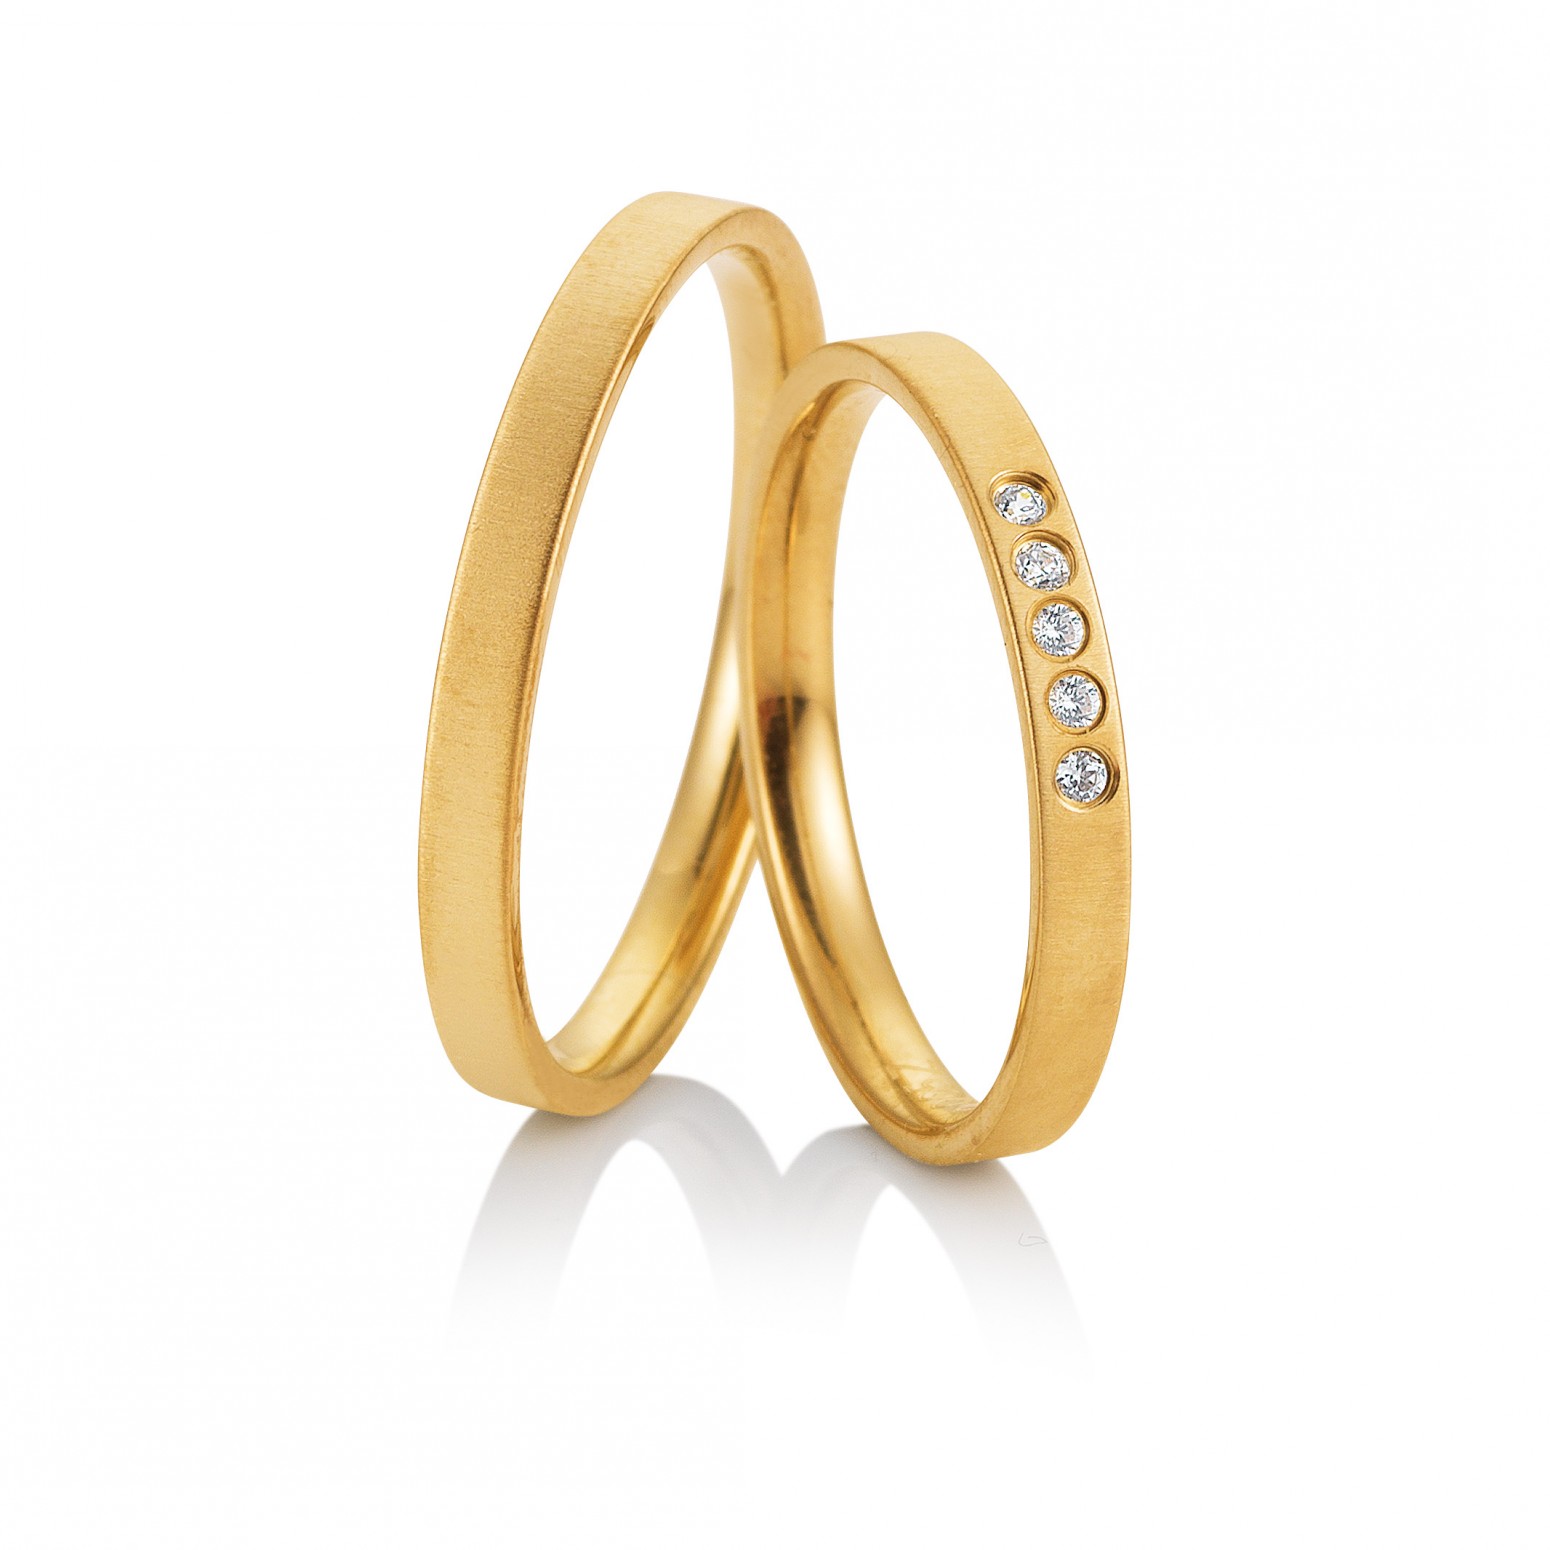 Saint Maurice wedding rings in yellow gold, K9, pair da3583 WEDDING RINGS Κοσμηματα - chrilia.gr